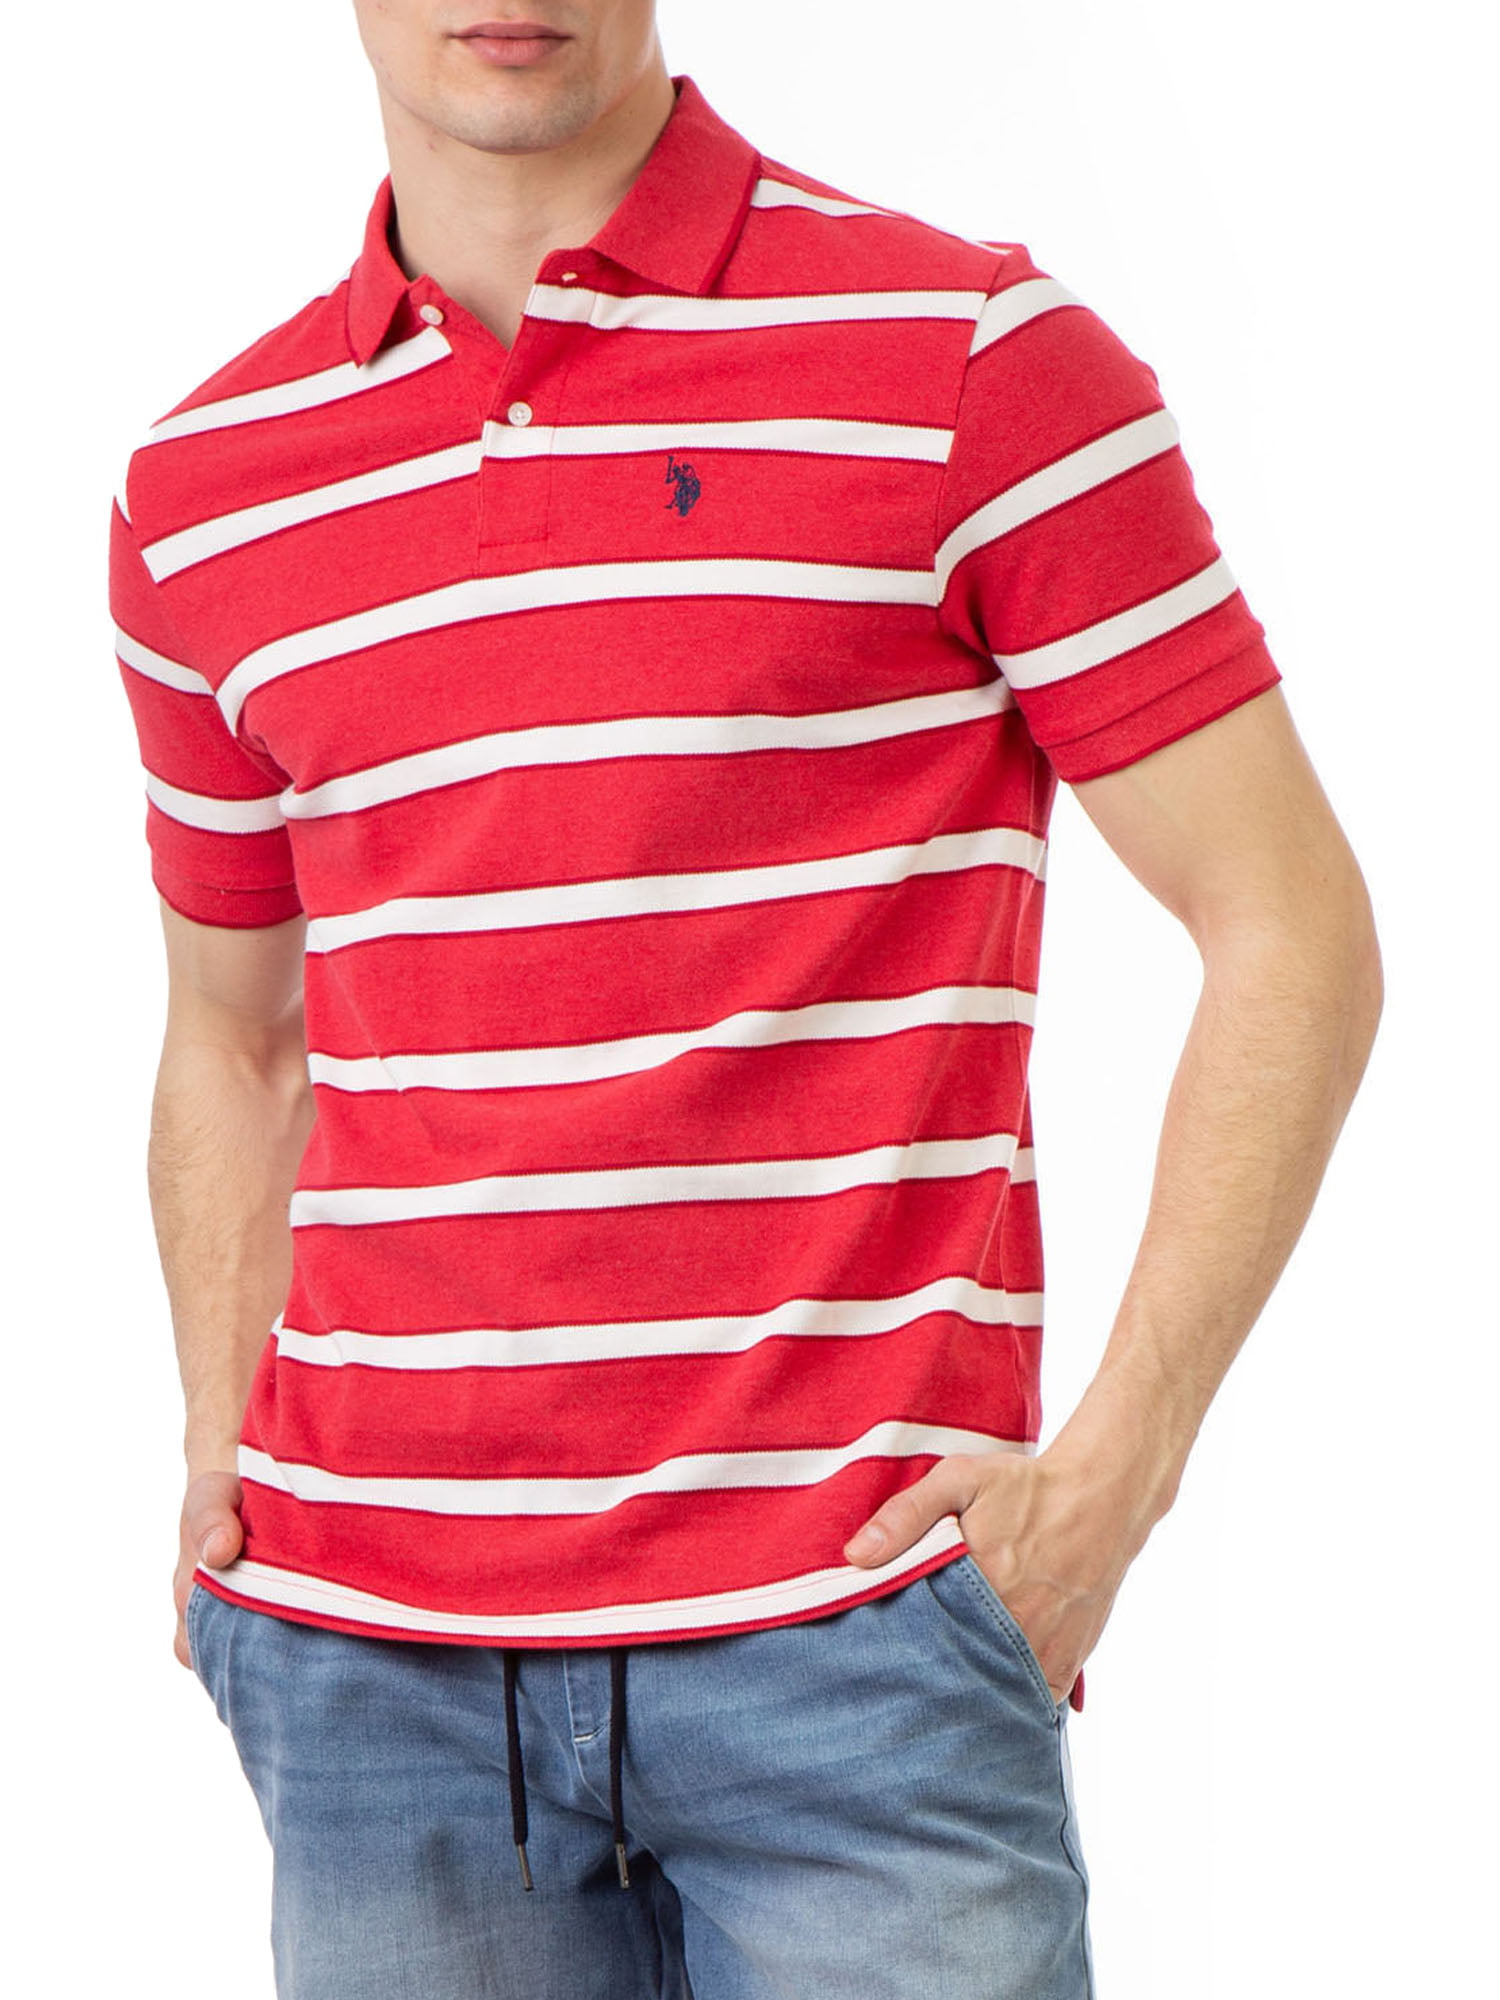 Mens Polo Striped T Shirt Short Sleeve Pique Shirt Premium  Summer Top M-XXL New